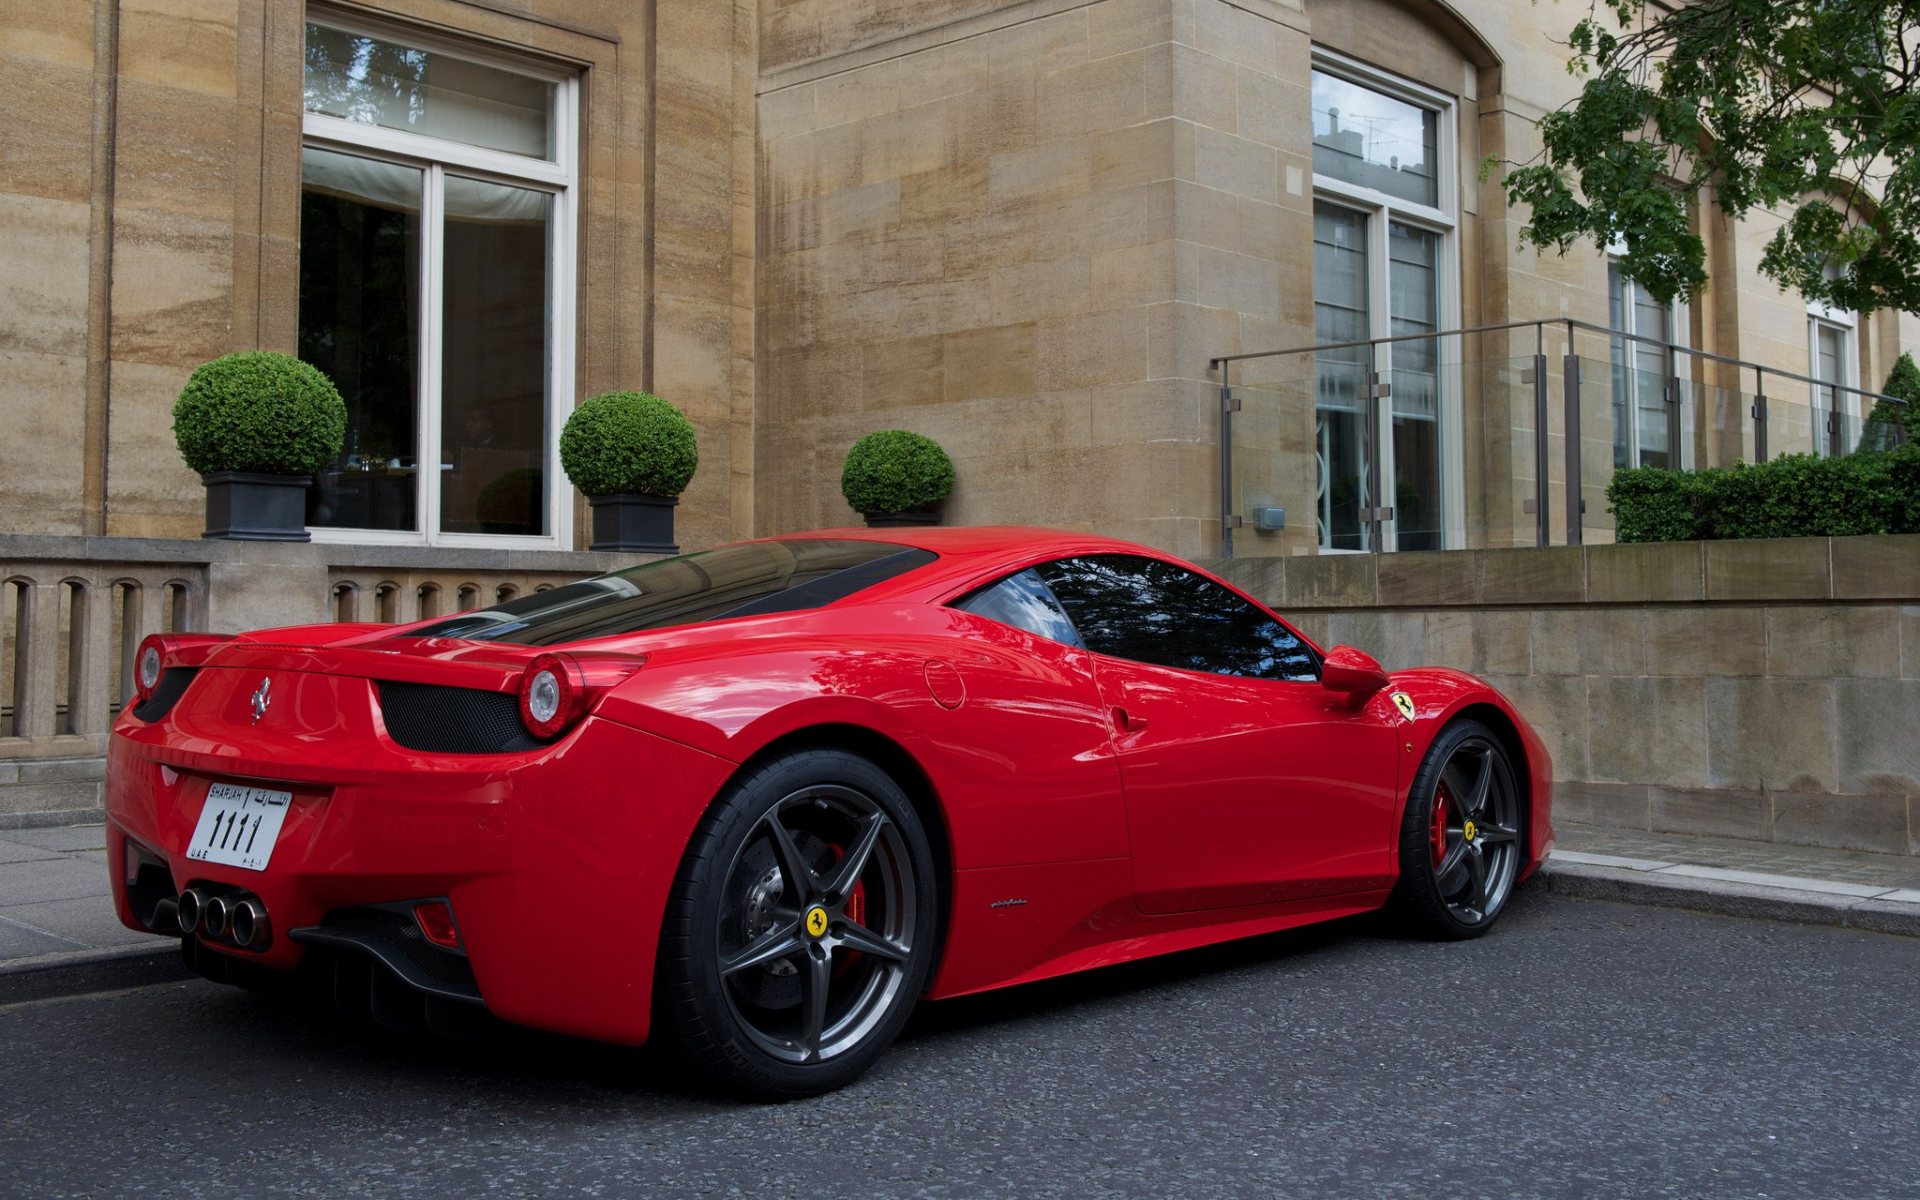 Красный ferrari. Феррари f458. Ferrari 458 Italia красная. Красный Ferrari 458 Italia[1]. Ferrari 458 Scuderia.